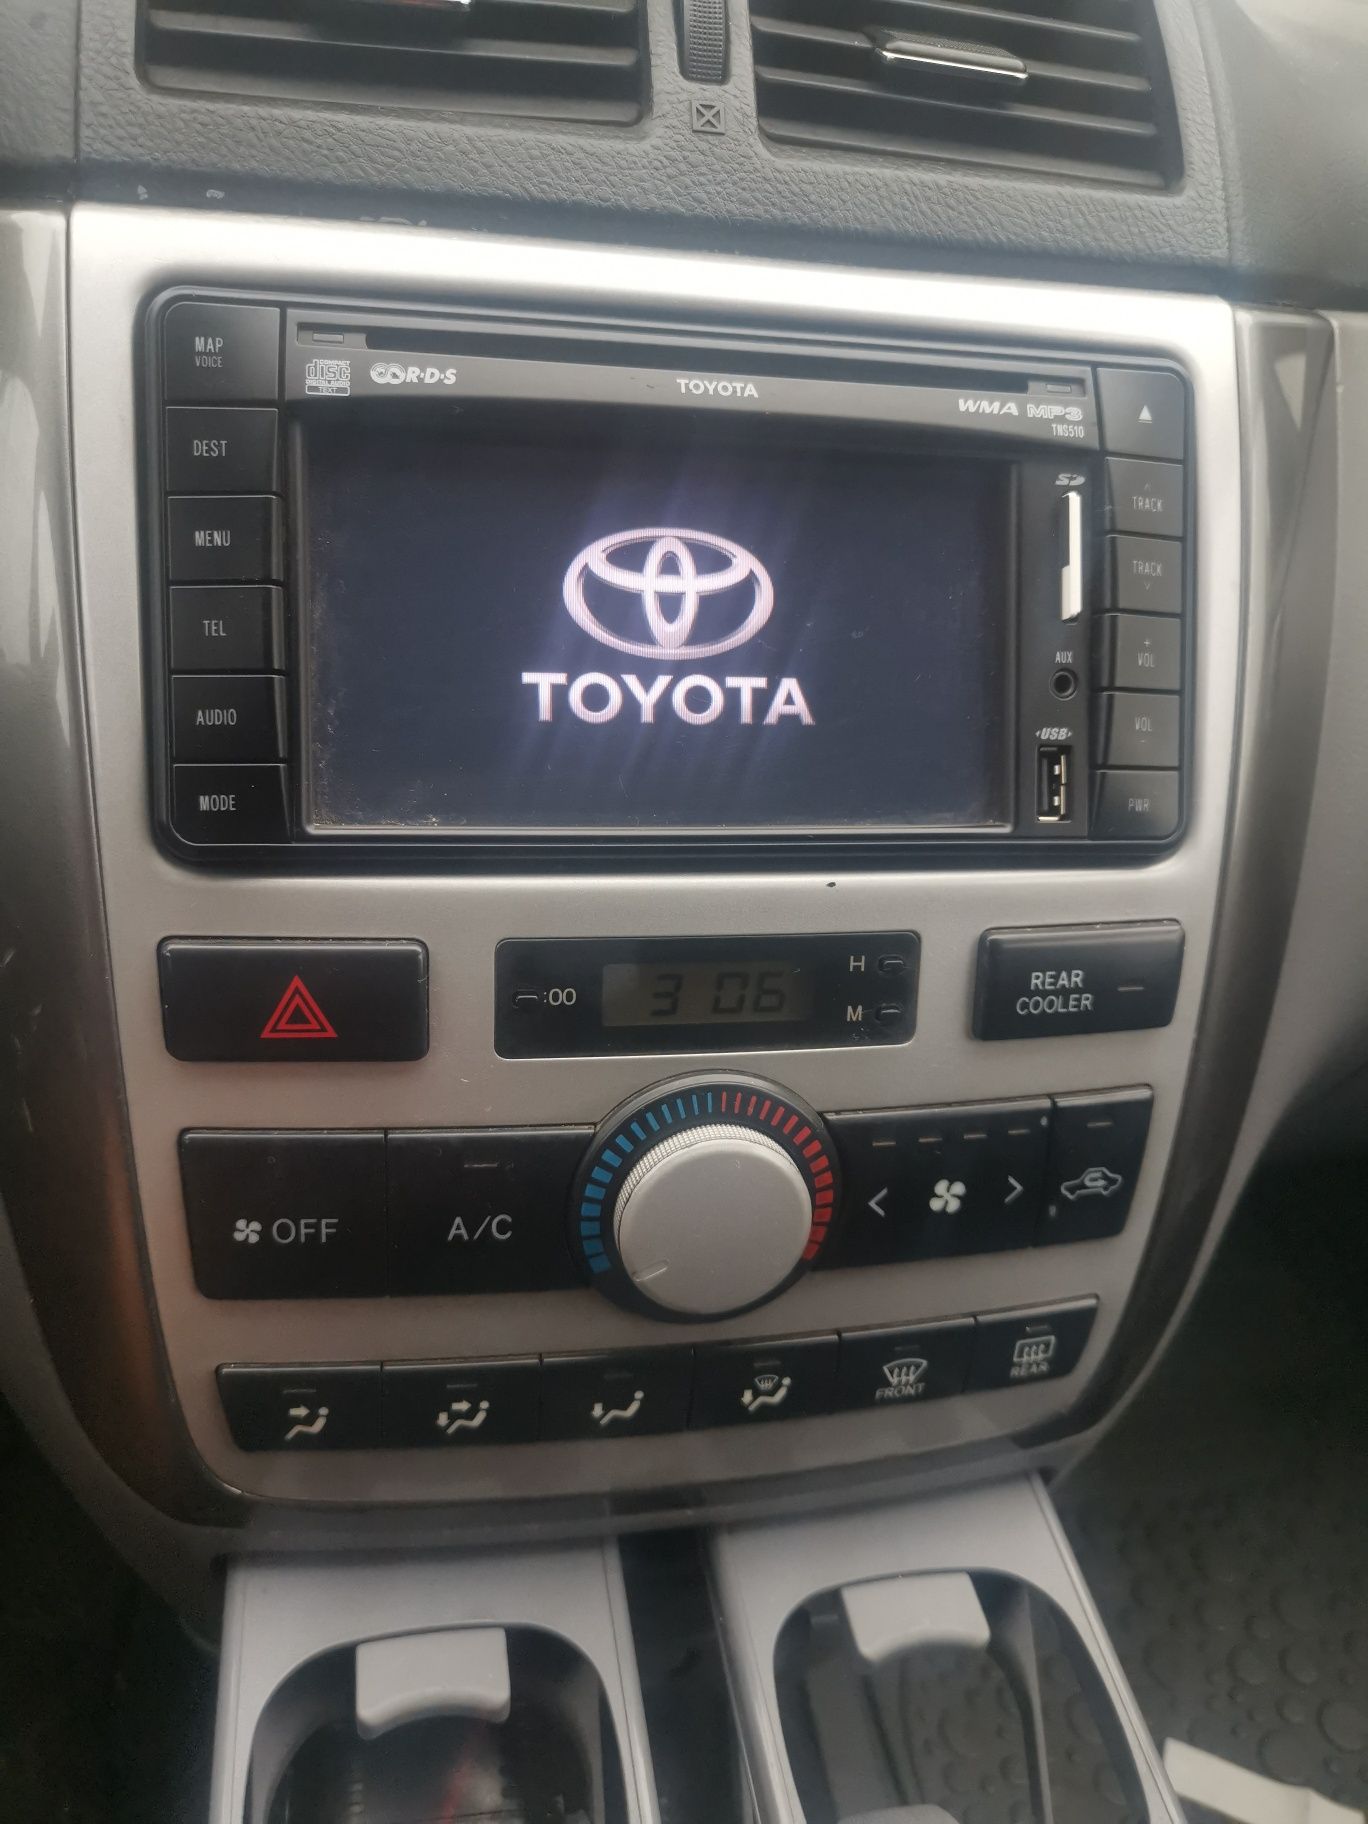 Navigație originala Toyota TNS510 completa